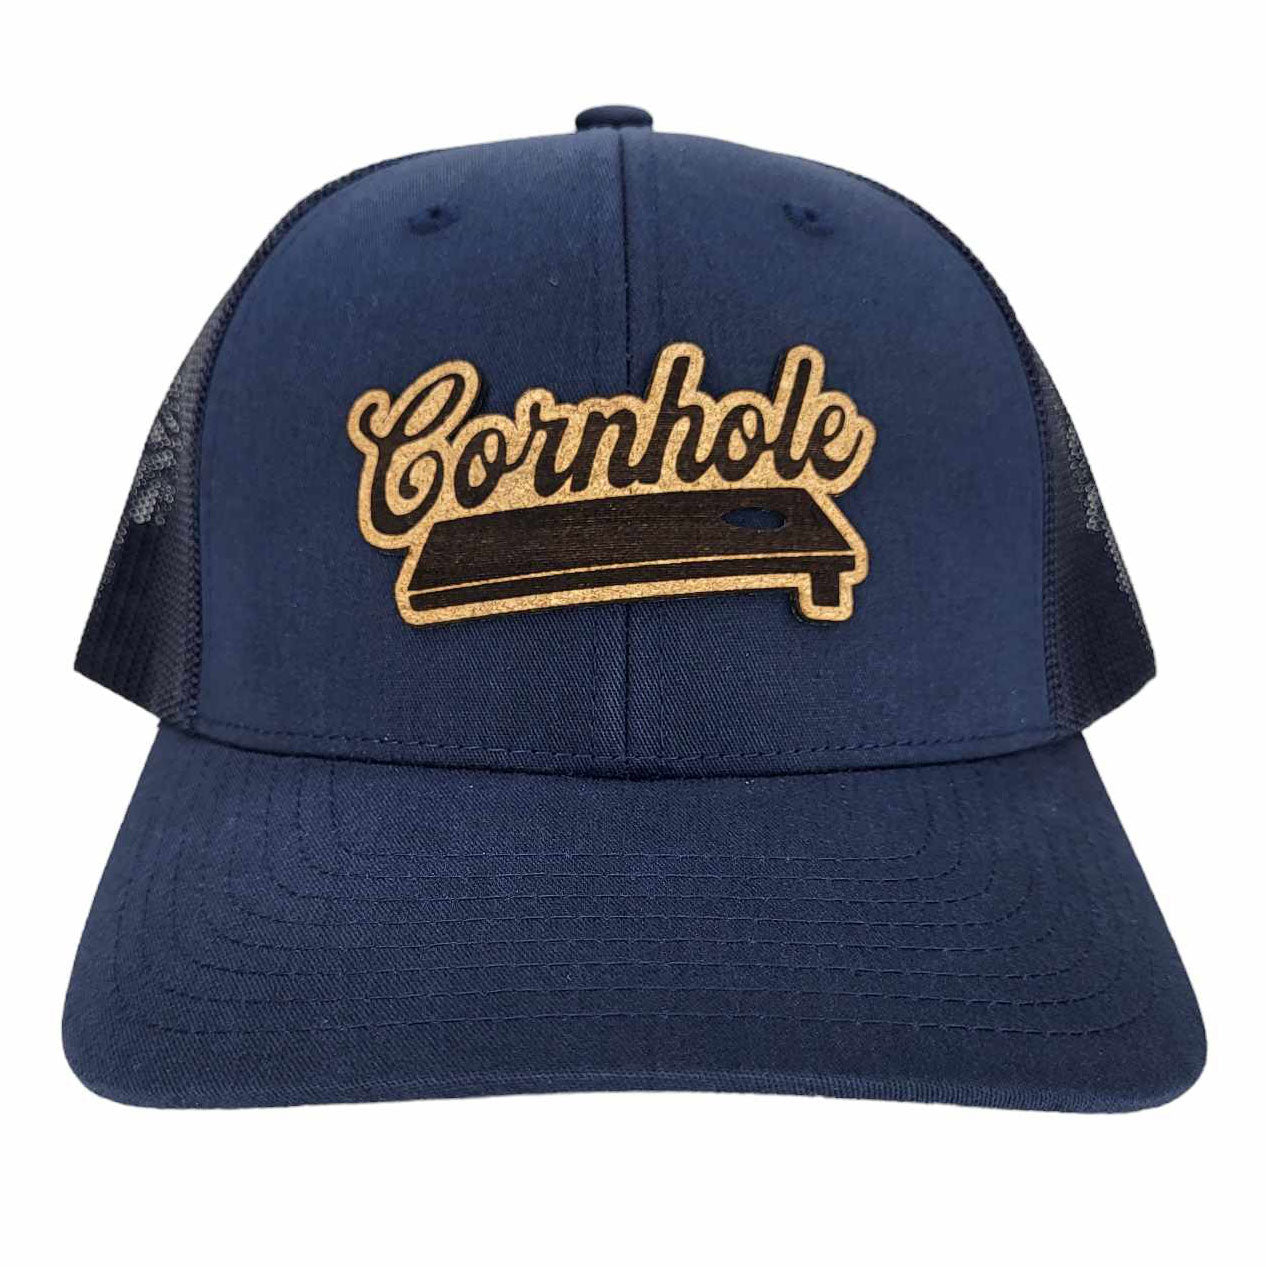 The Cornhole Cork Hat